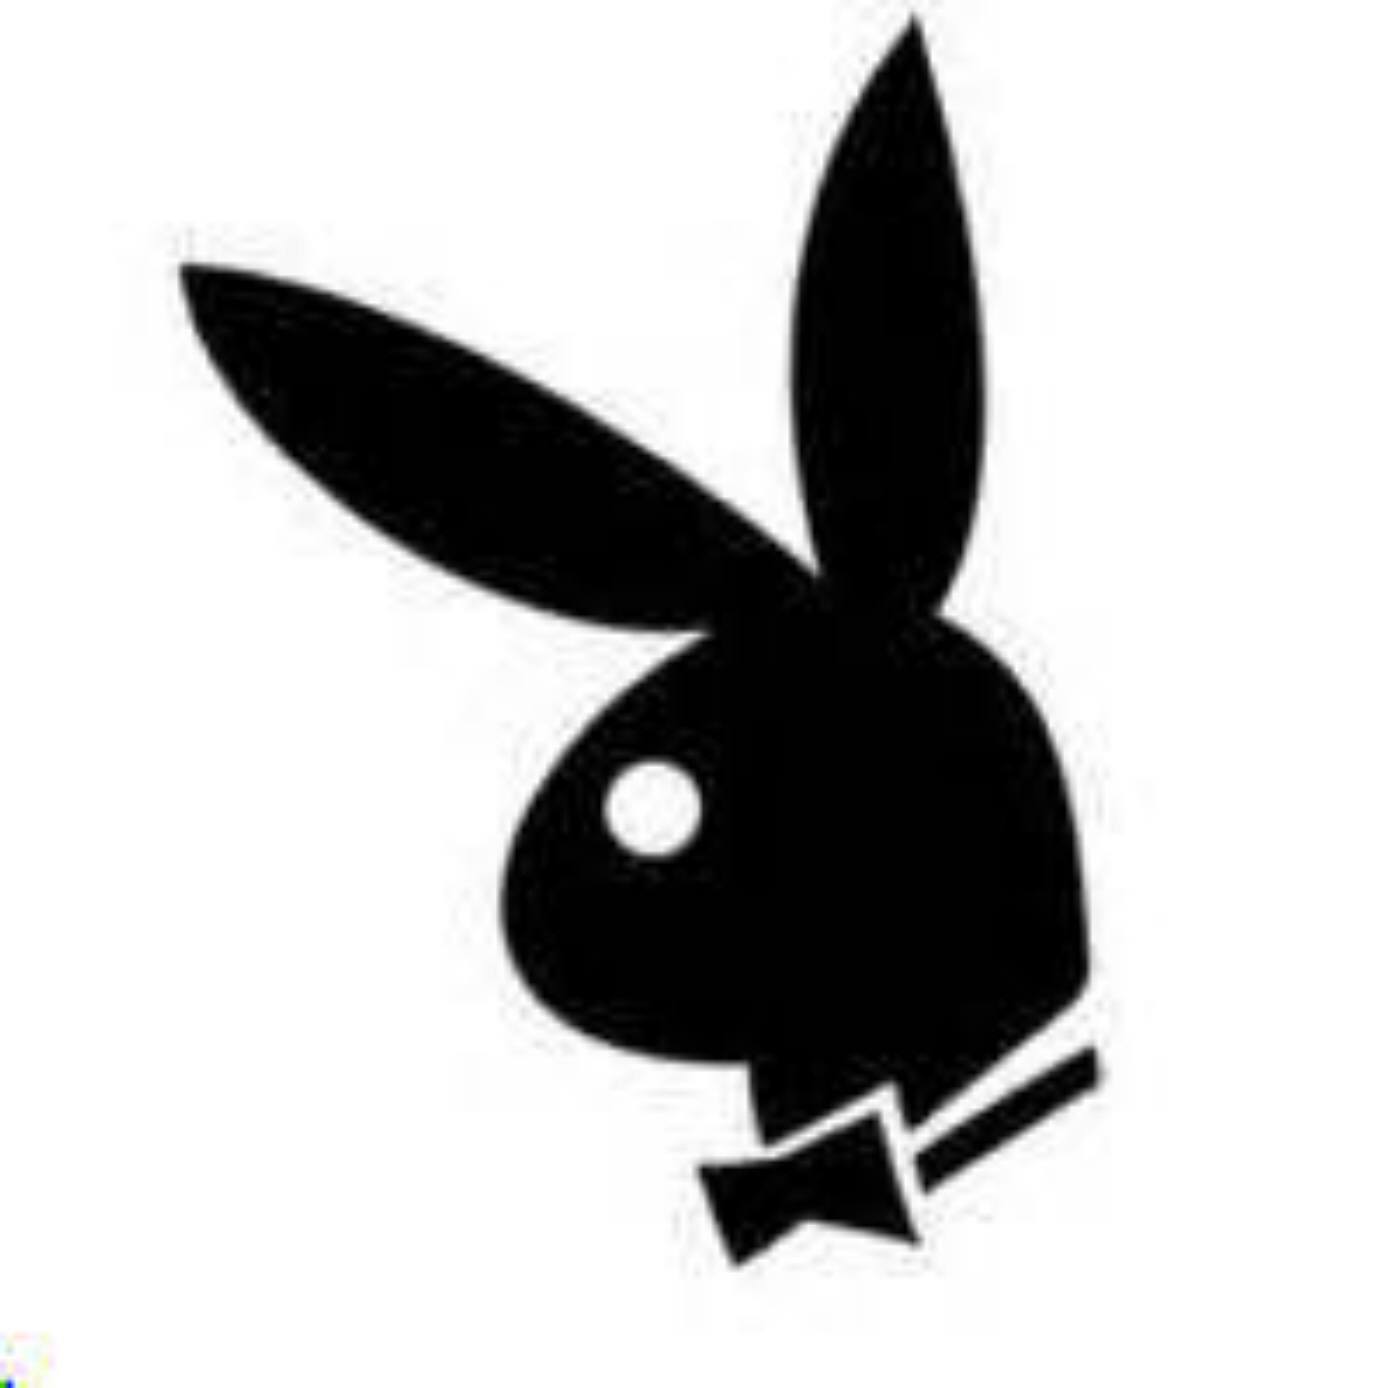 21 playboy bunny decals silhouette drawing by HandmadeitemsbyKaren